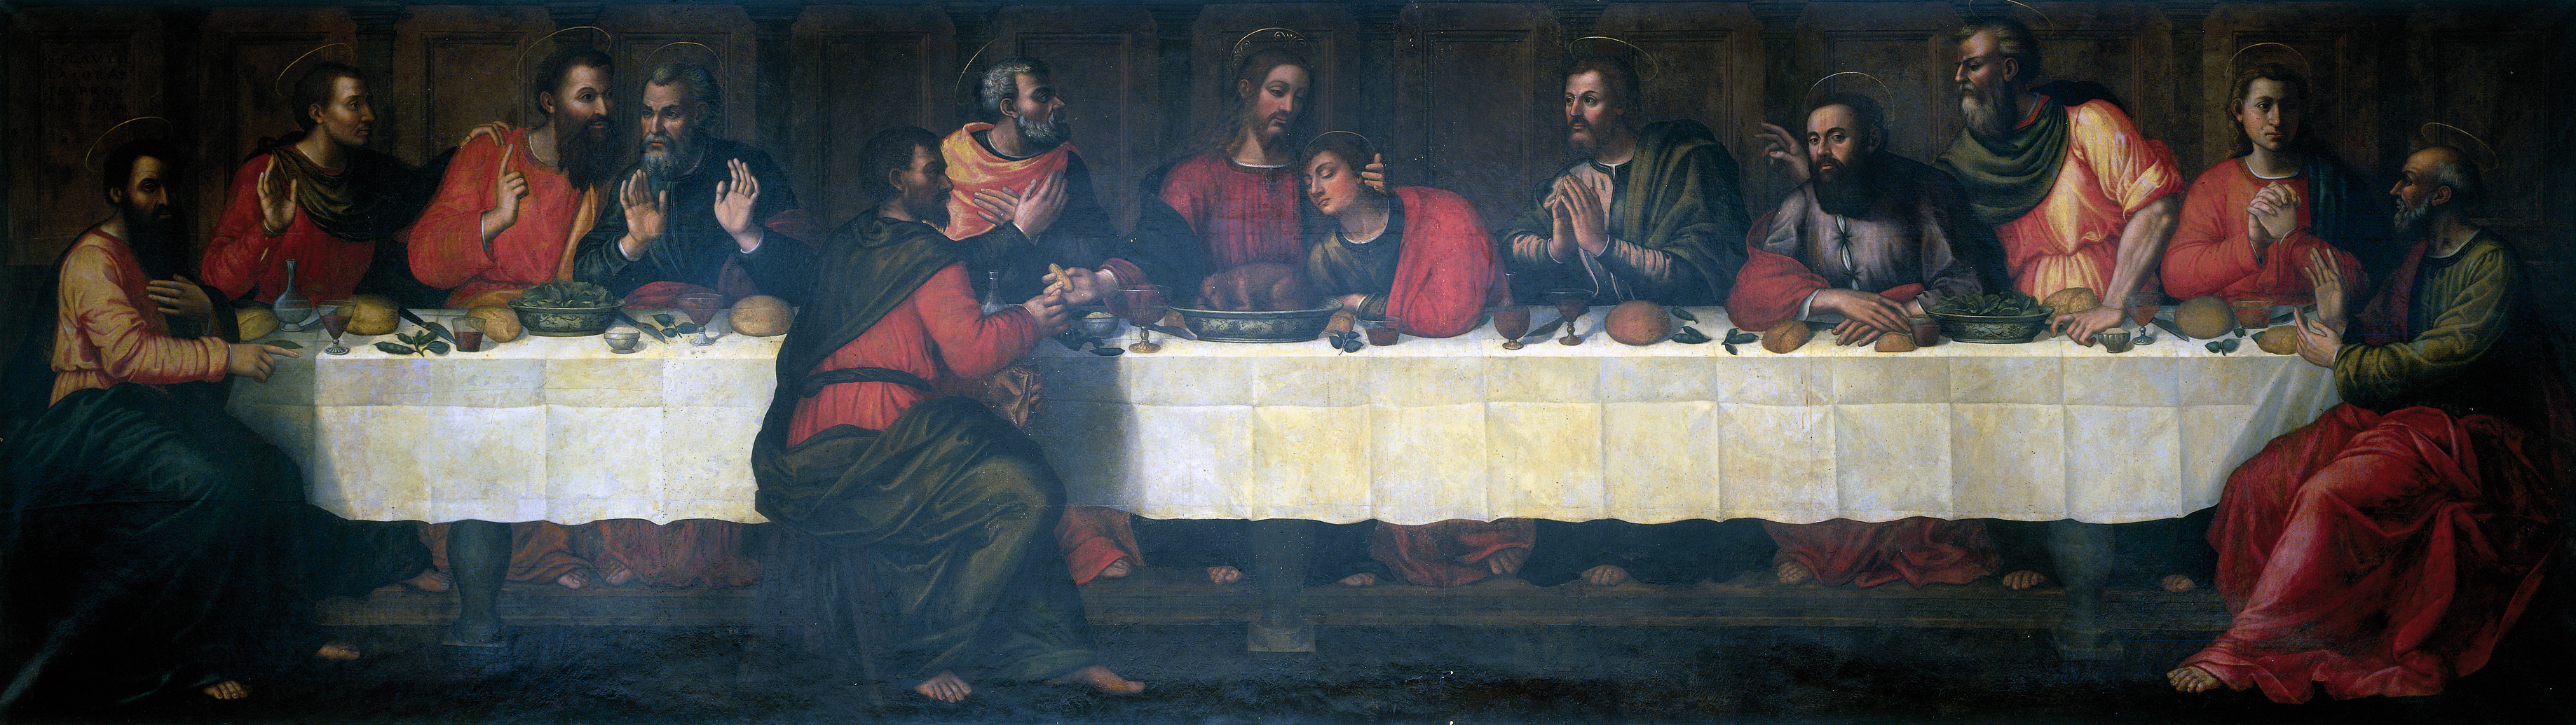 Nihai Akşam Yemeği by Plautilla Nelli - 16th century 